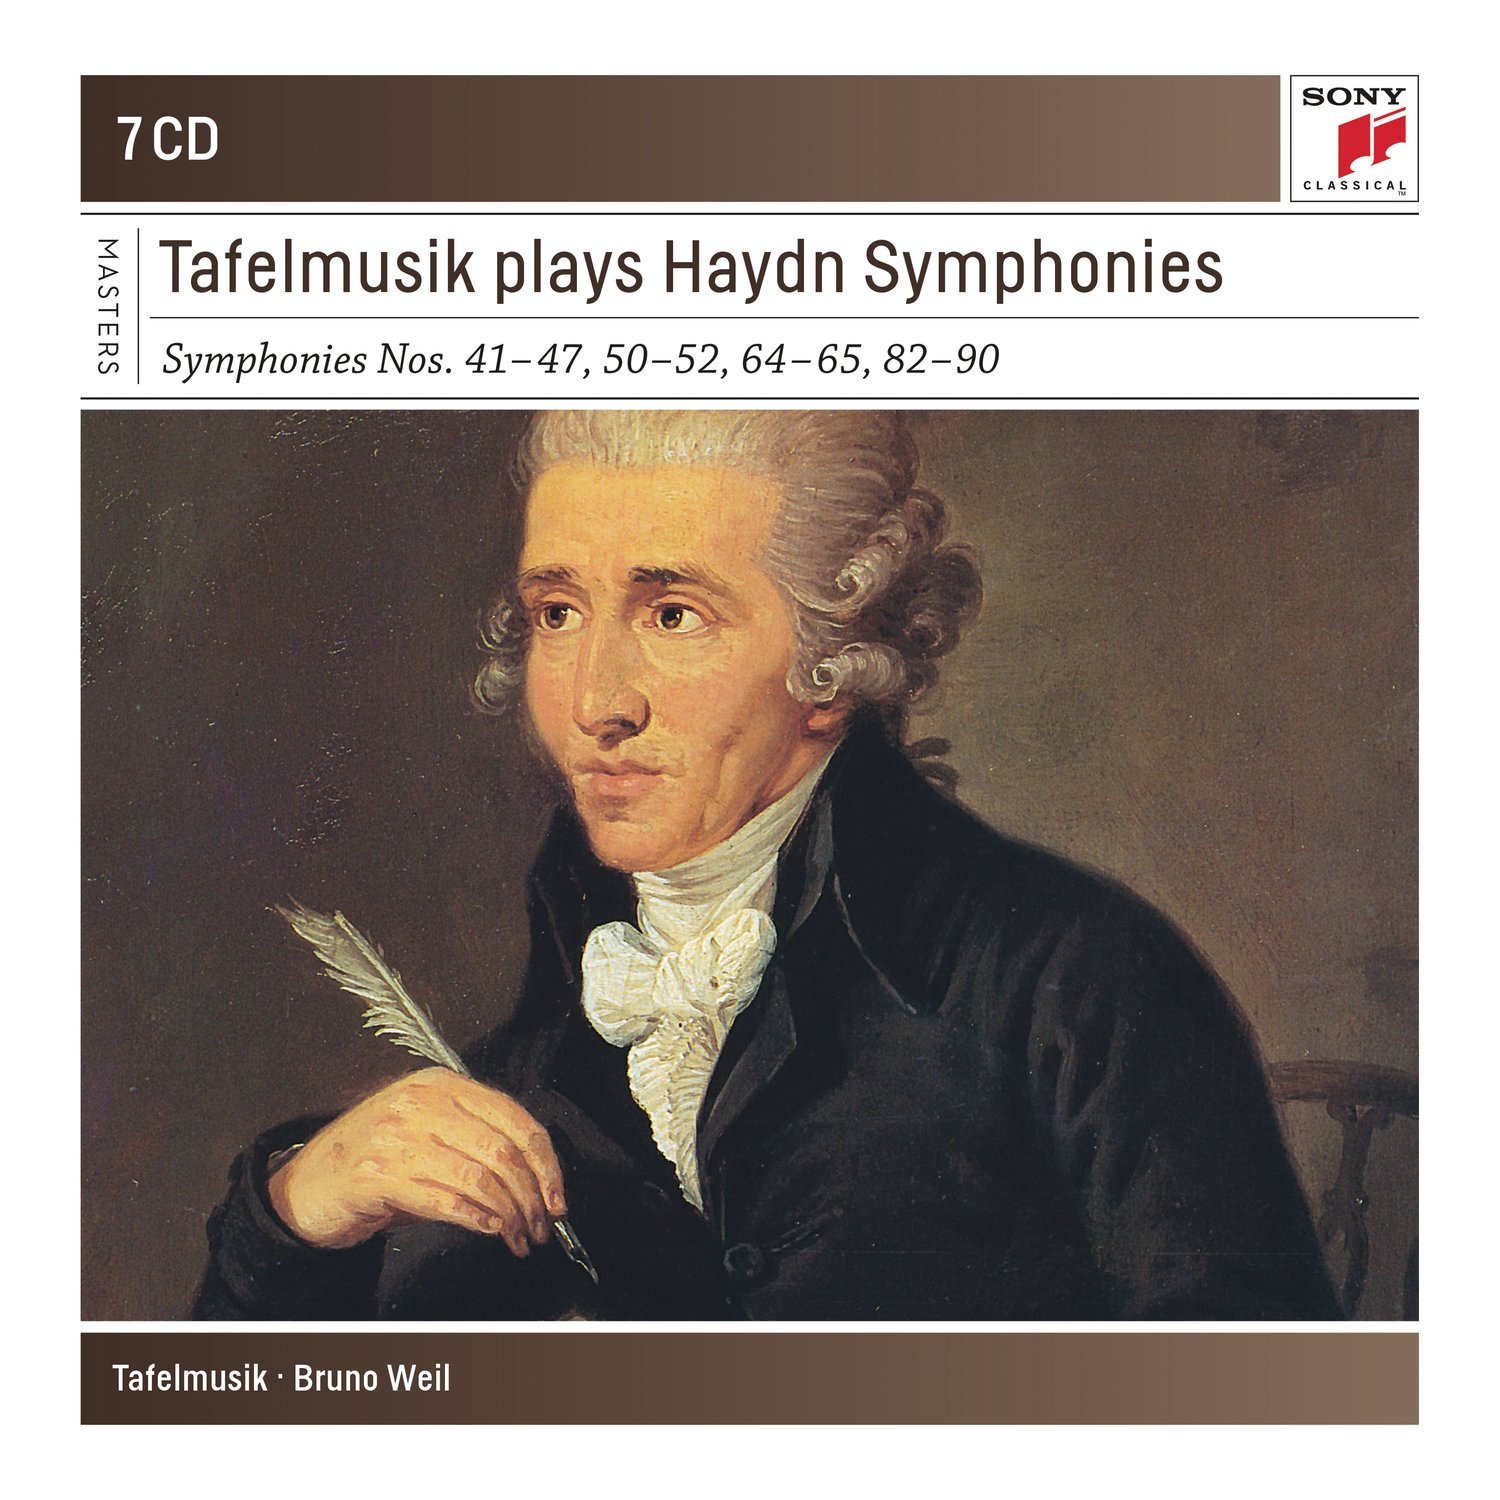 Tafelmusik Plays Haydn Symphonies - CD | Franz Joseph Haydn, Bruno Weil, Tafelmusik